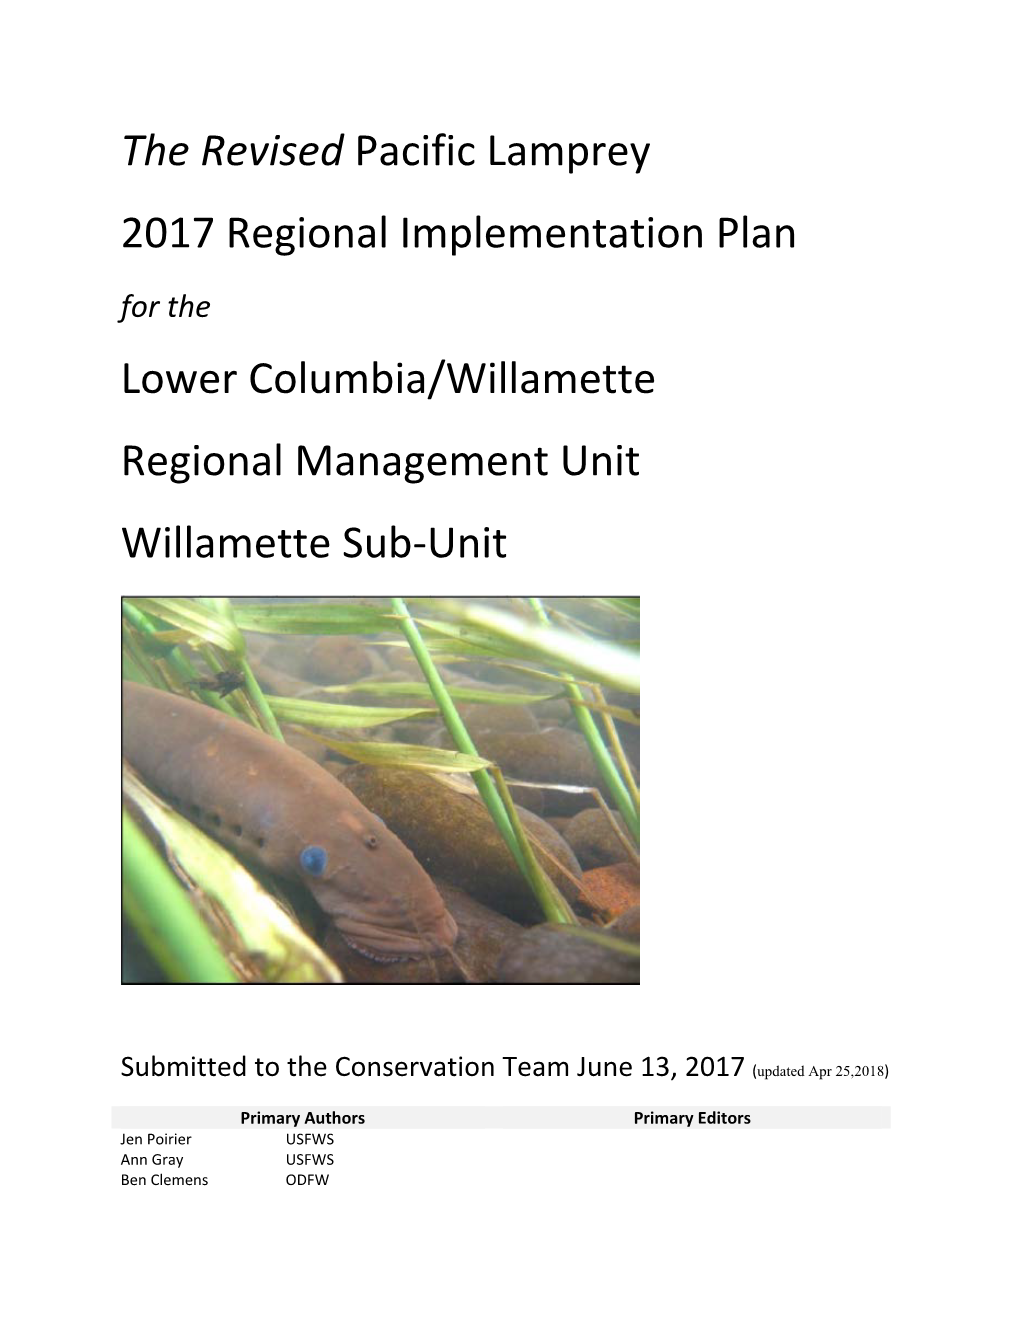 The Revised Pacific Lamprey 2017 Regional Implementation Plan for the Lower Columbia/Willamette Regional Management Unit Willamette Sub-Unit